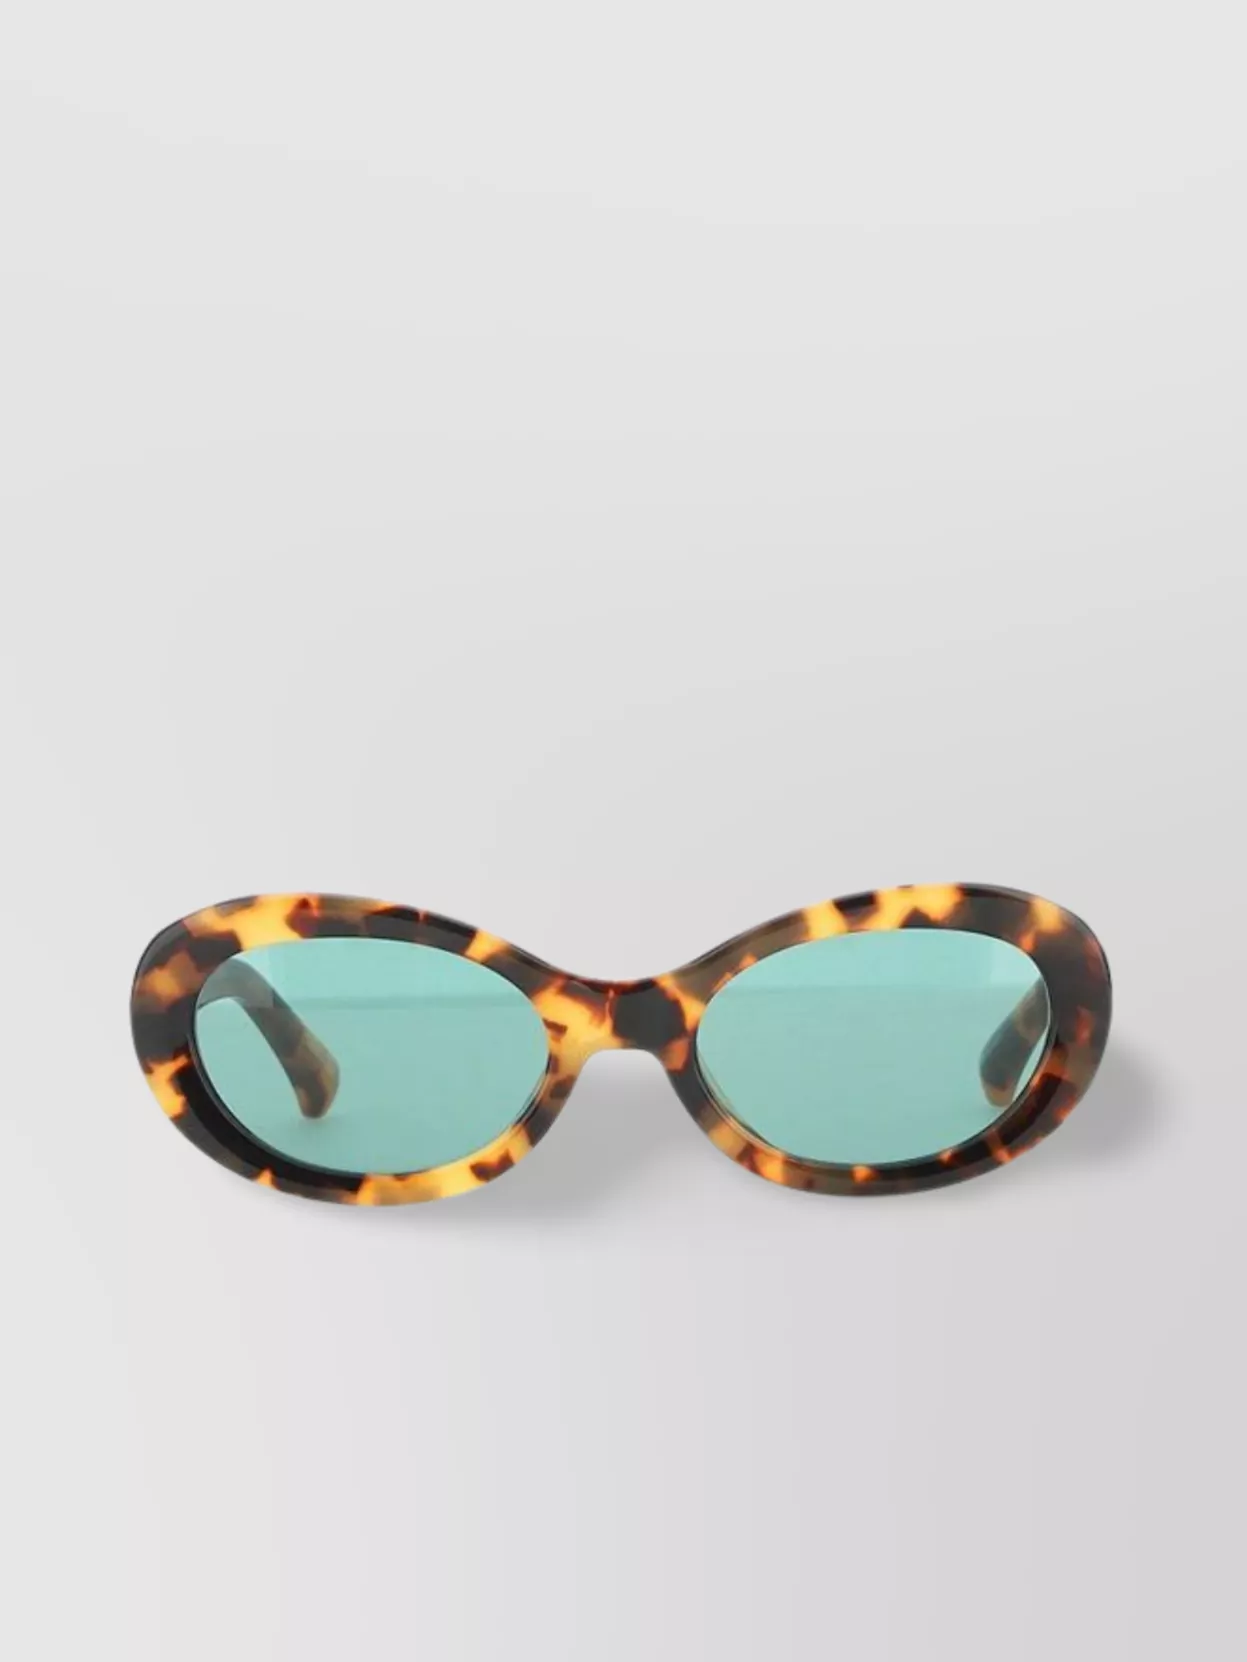 Dries Van Noten Oval Frame Sunglasses Tortoiseshell Pattern In Brown